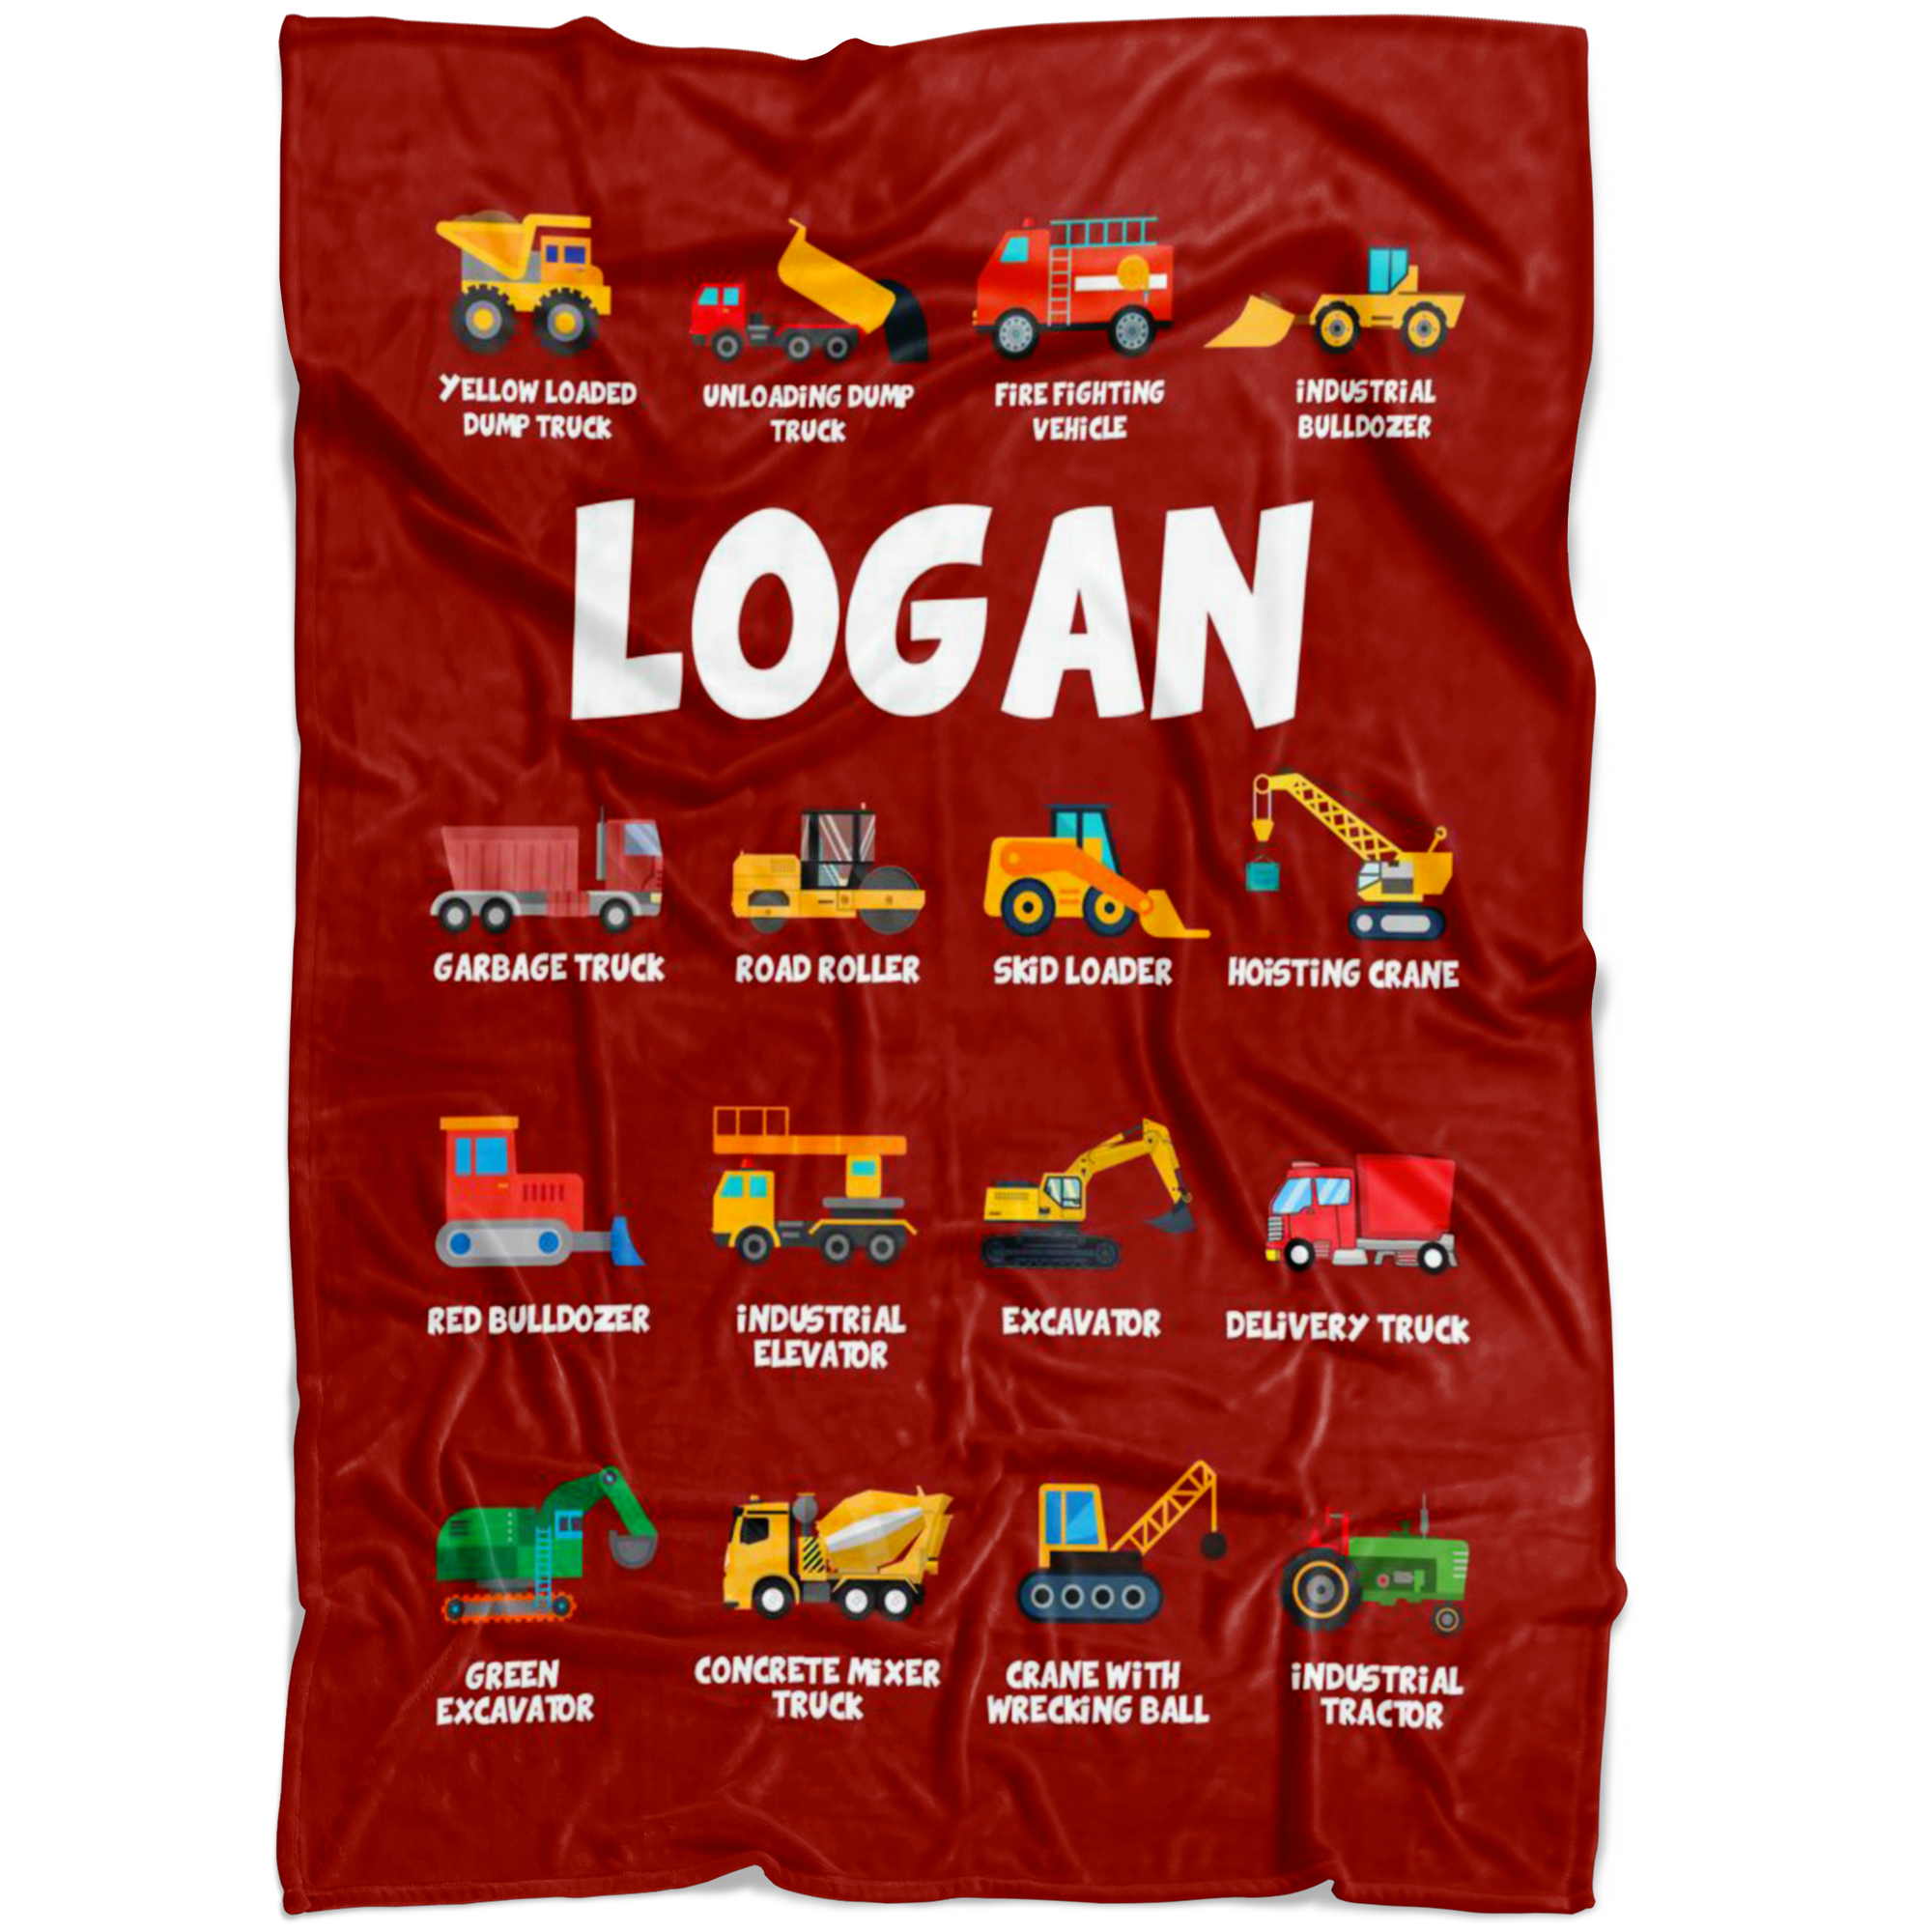 Logan Construction Blanket Red